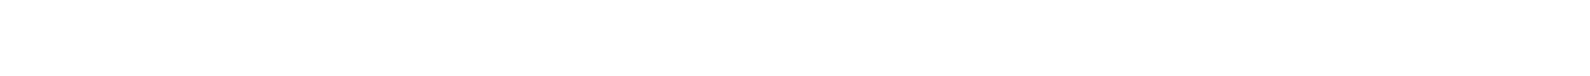 General Dynamics Logo groß für dunkle Hintergründe (transparentes PNG)